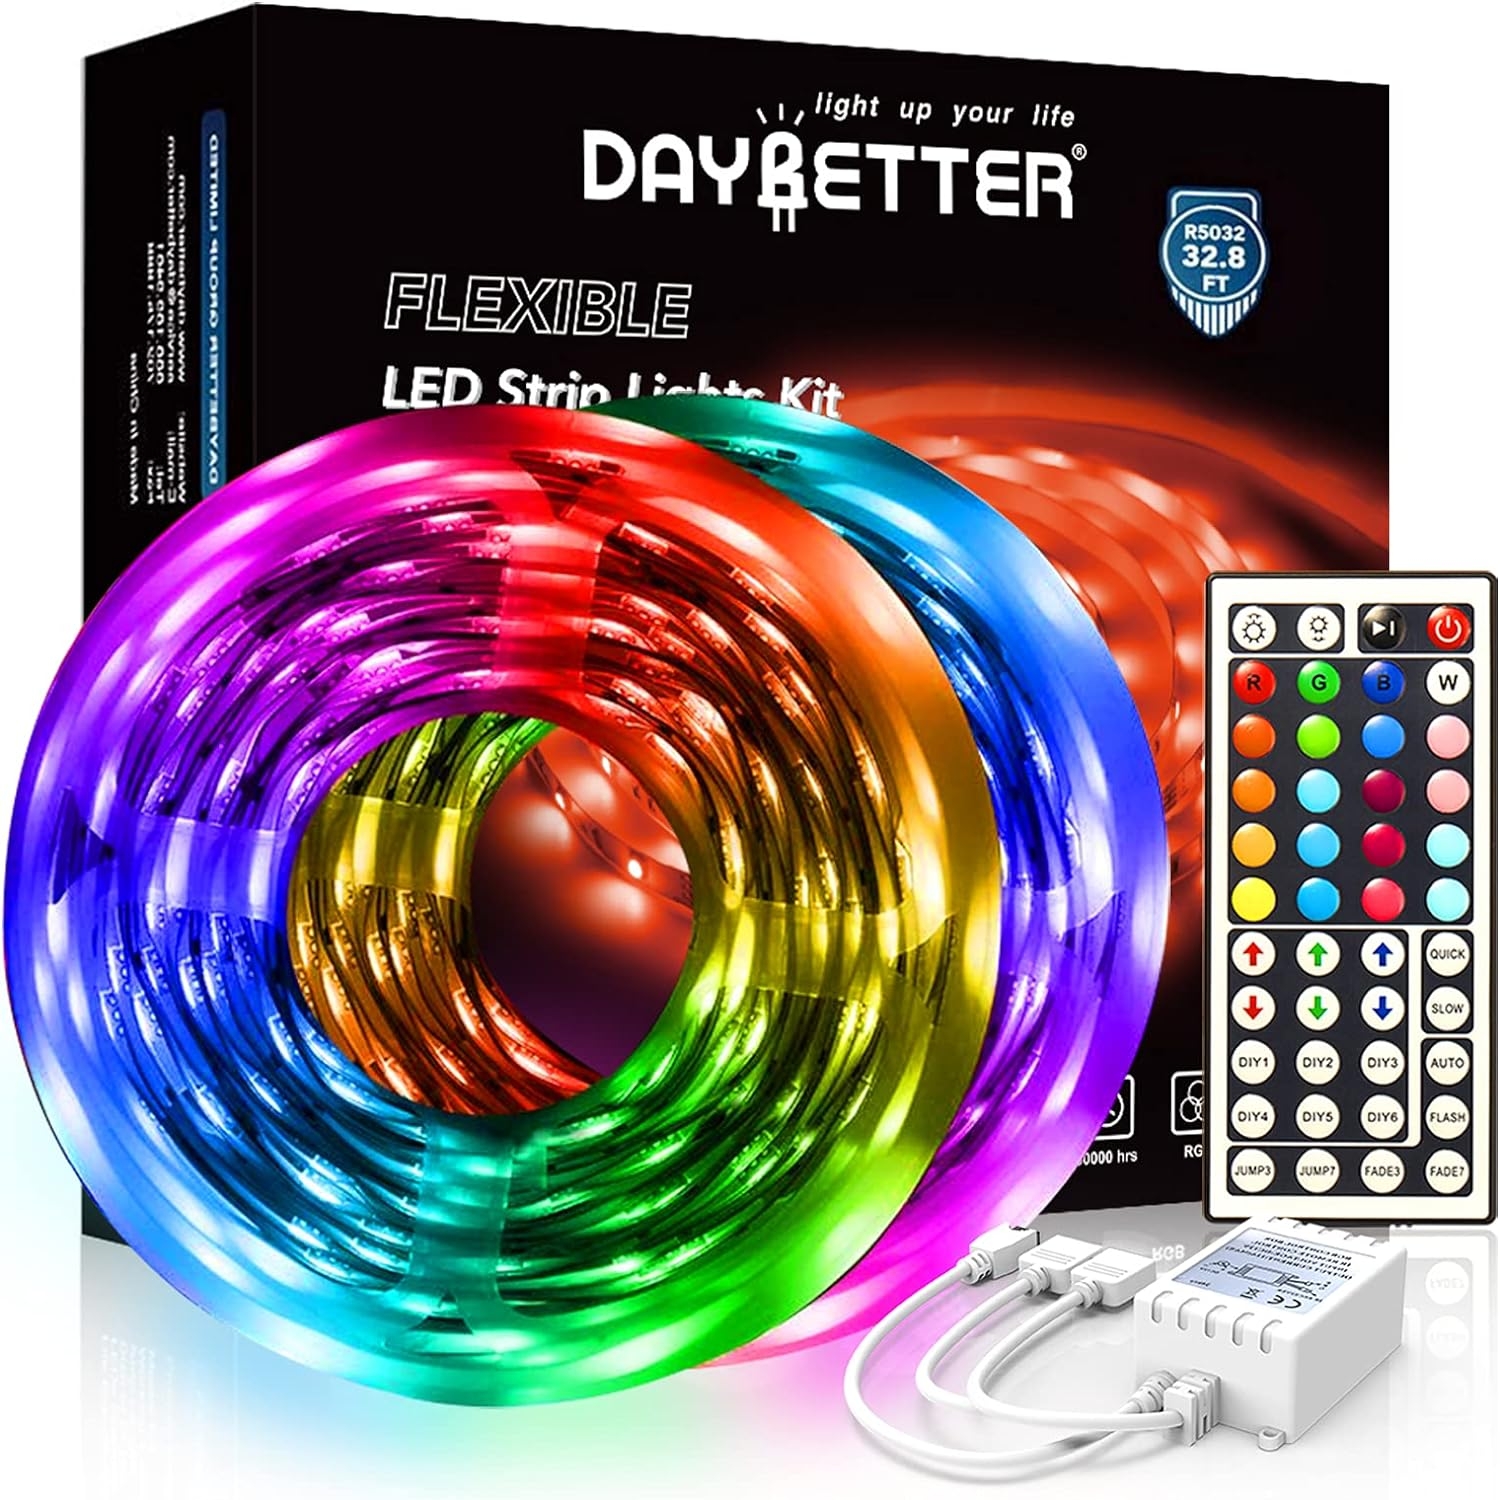 DAYBETTER Led Strip Lights 32.8ft 5050 RGB 300 LEDs Color Changing Lights Strip for Bedroom, Desk, Home Decoration, with Remote and 12V Power Supply